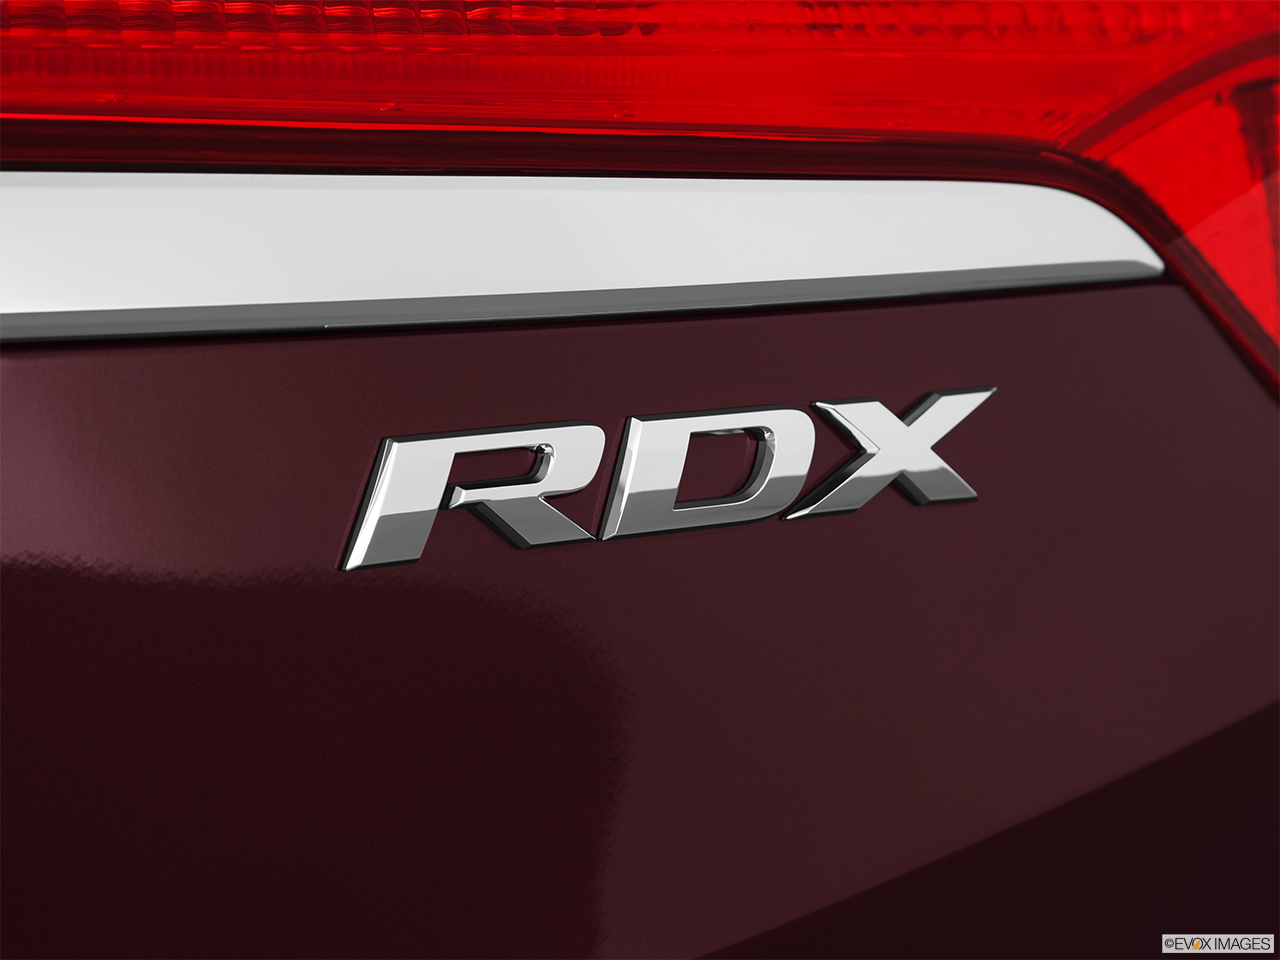 2013 Acura RDX AWD Rear model badge/emblem 